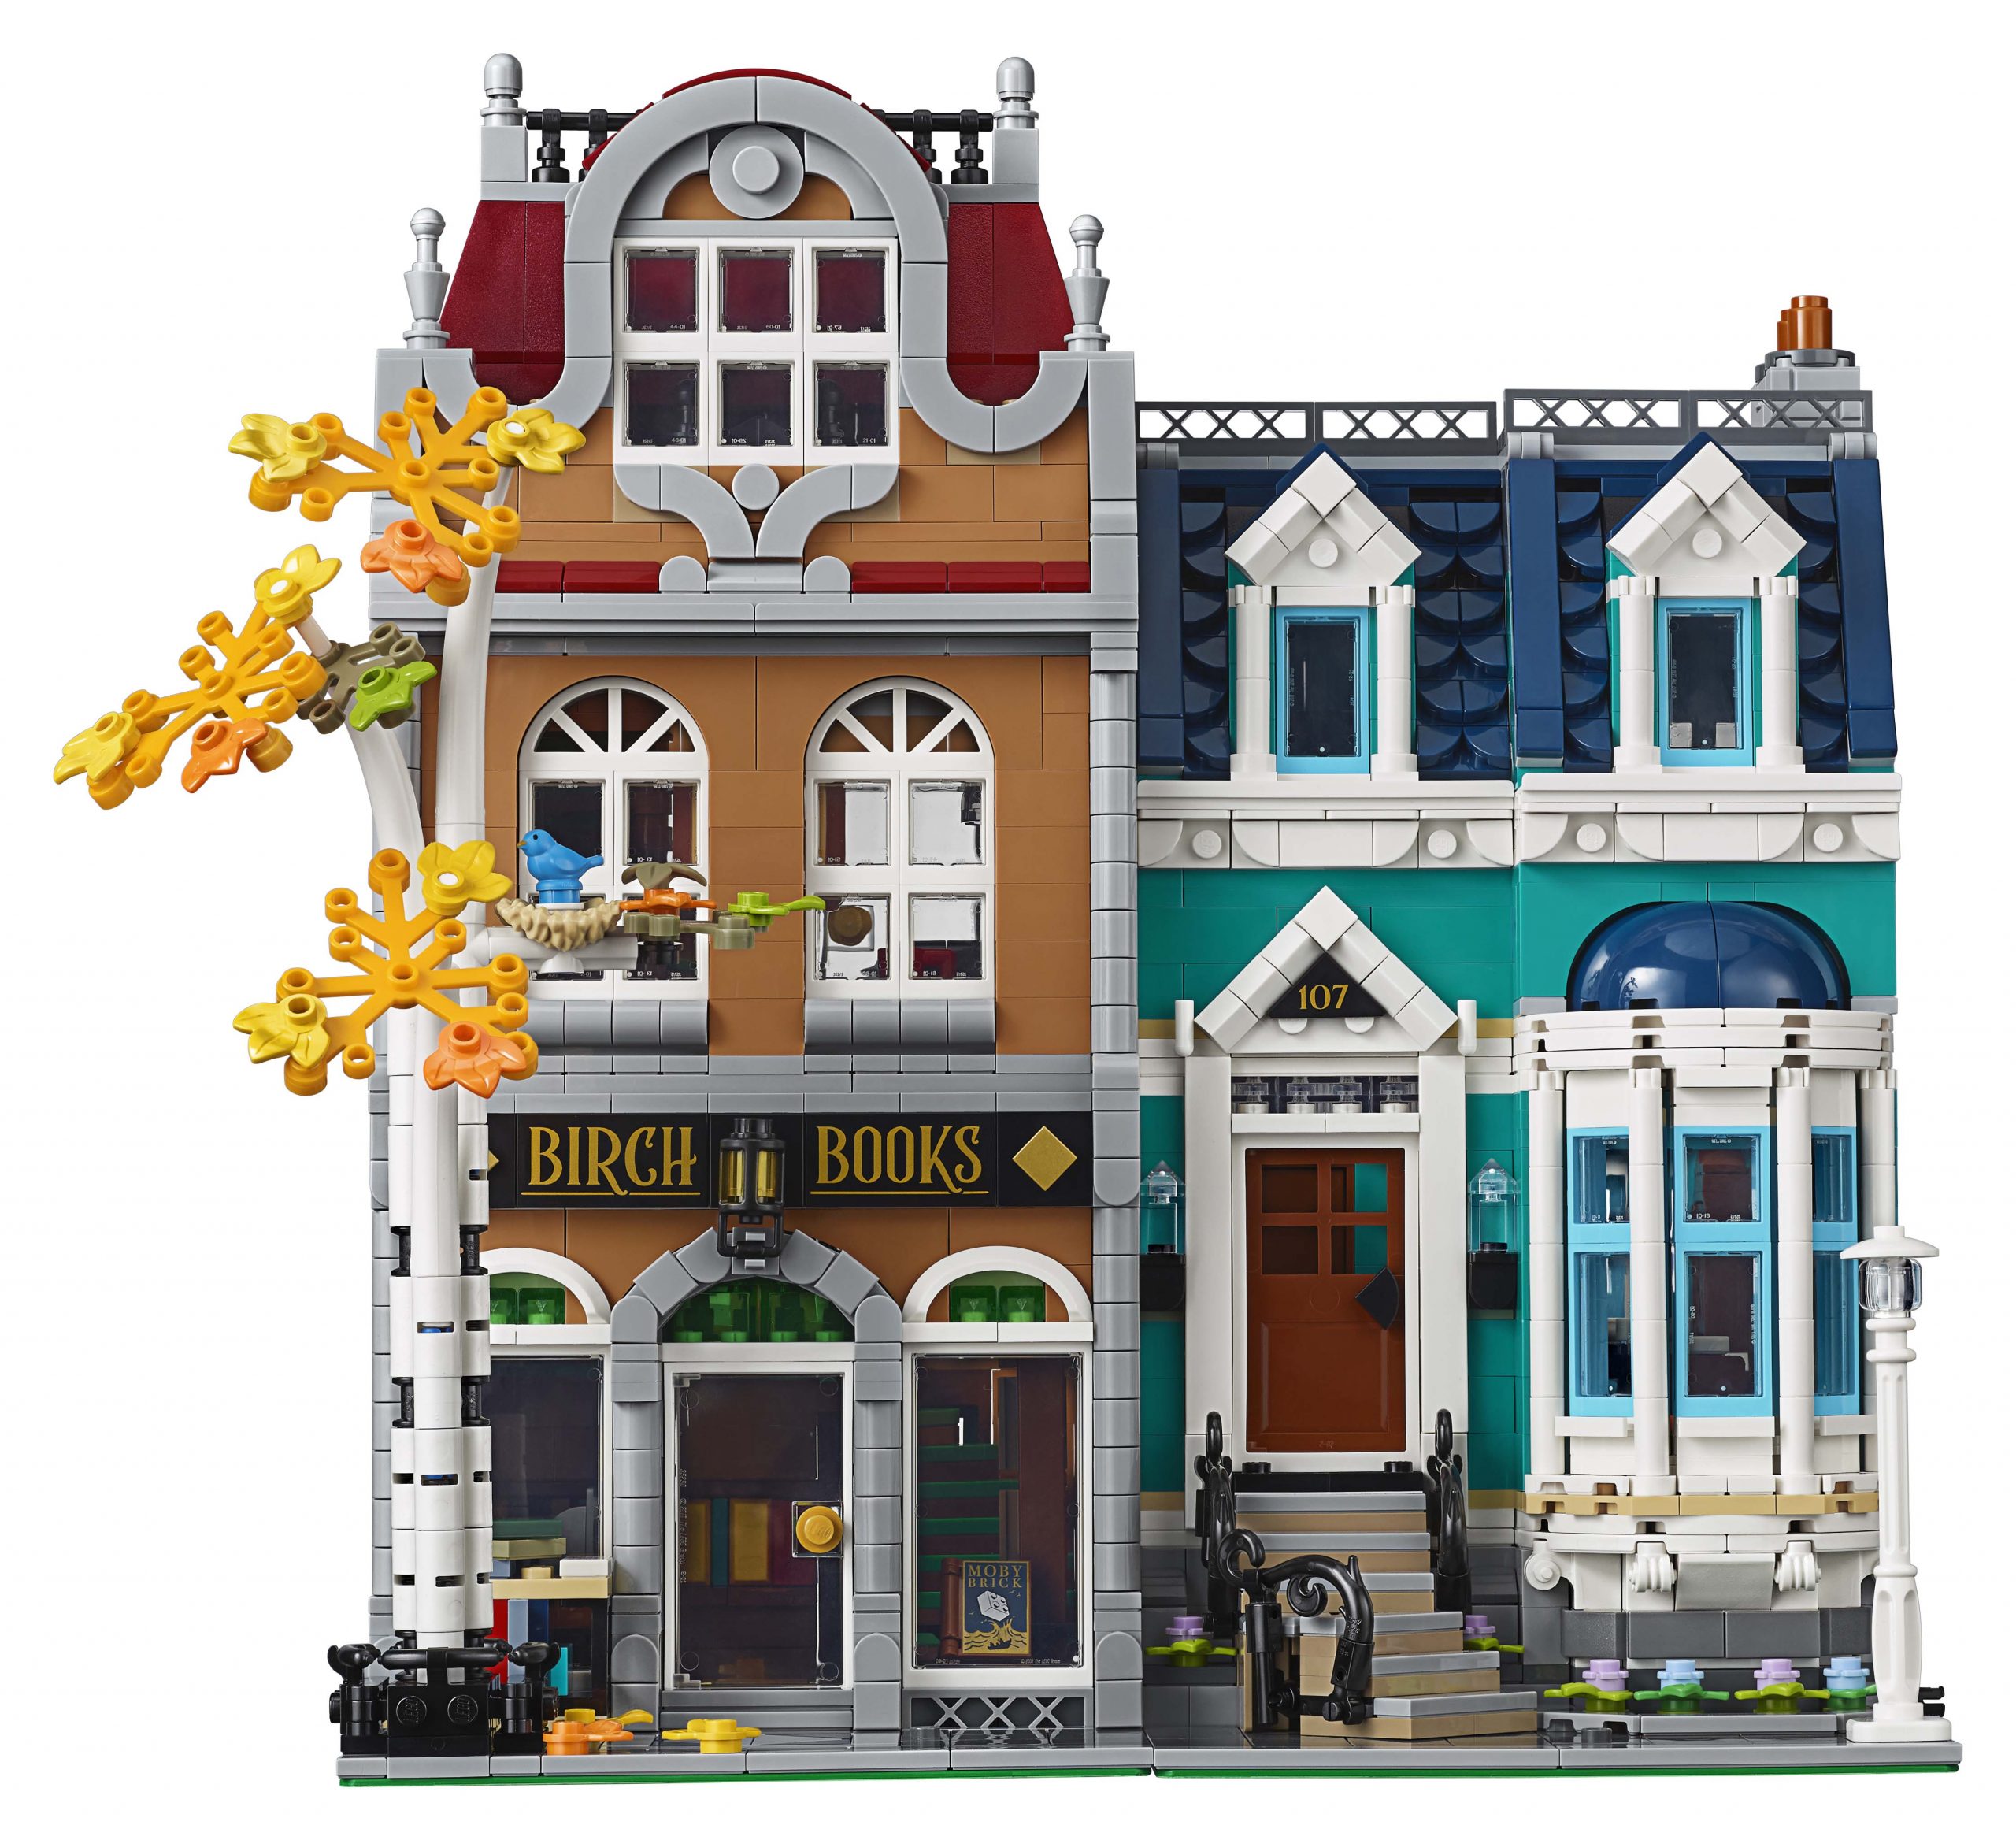 LEGO Creator Bookshop (10270) Officially Announced - The Brick Fan